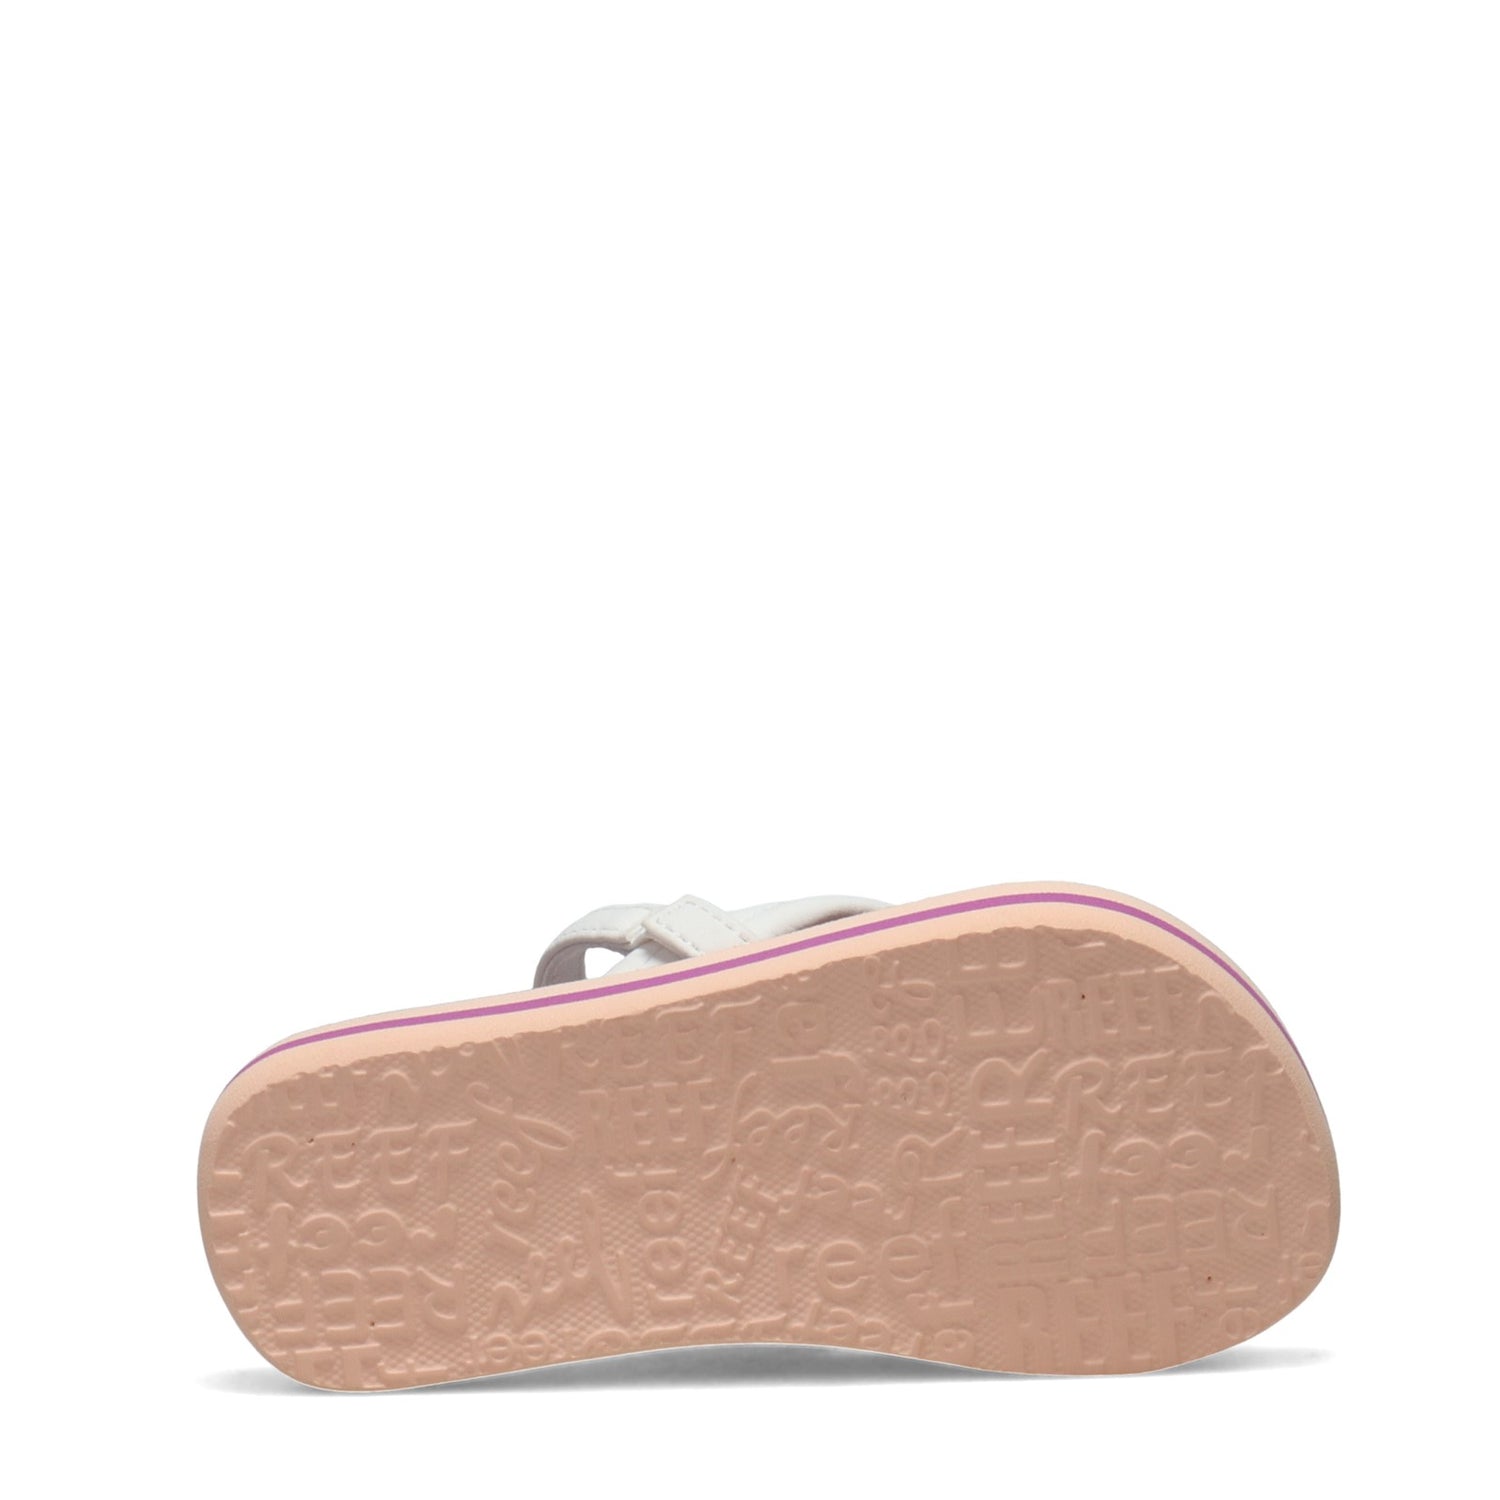 Peltz Shoes  Girl's Reef Little Ahi Sandal - Toddler & Little Kid Coral Pineapples CI4065